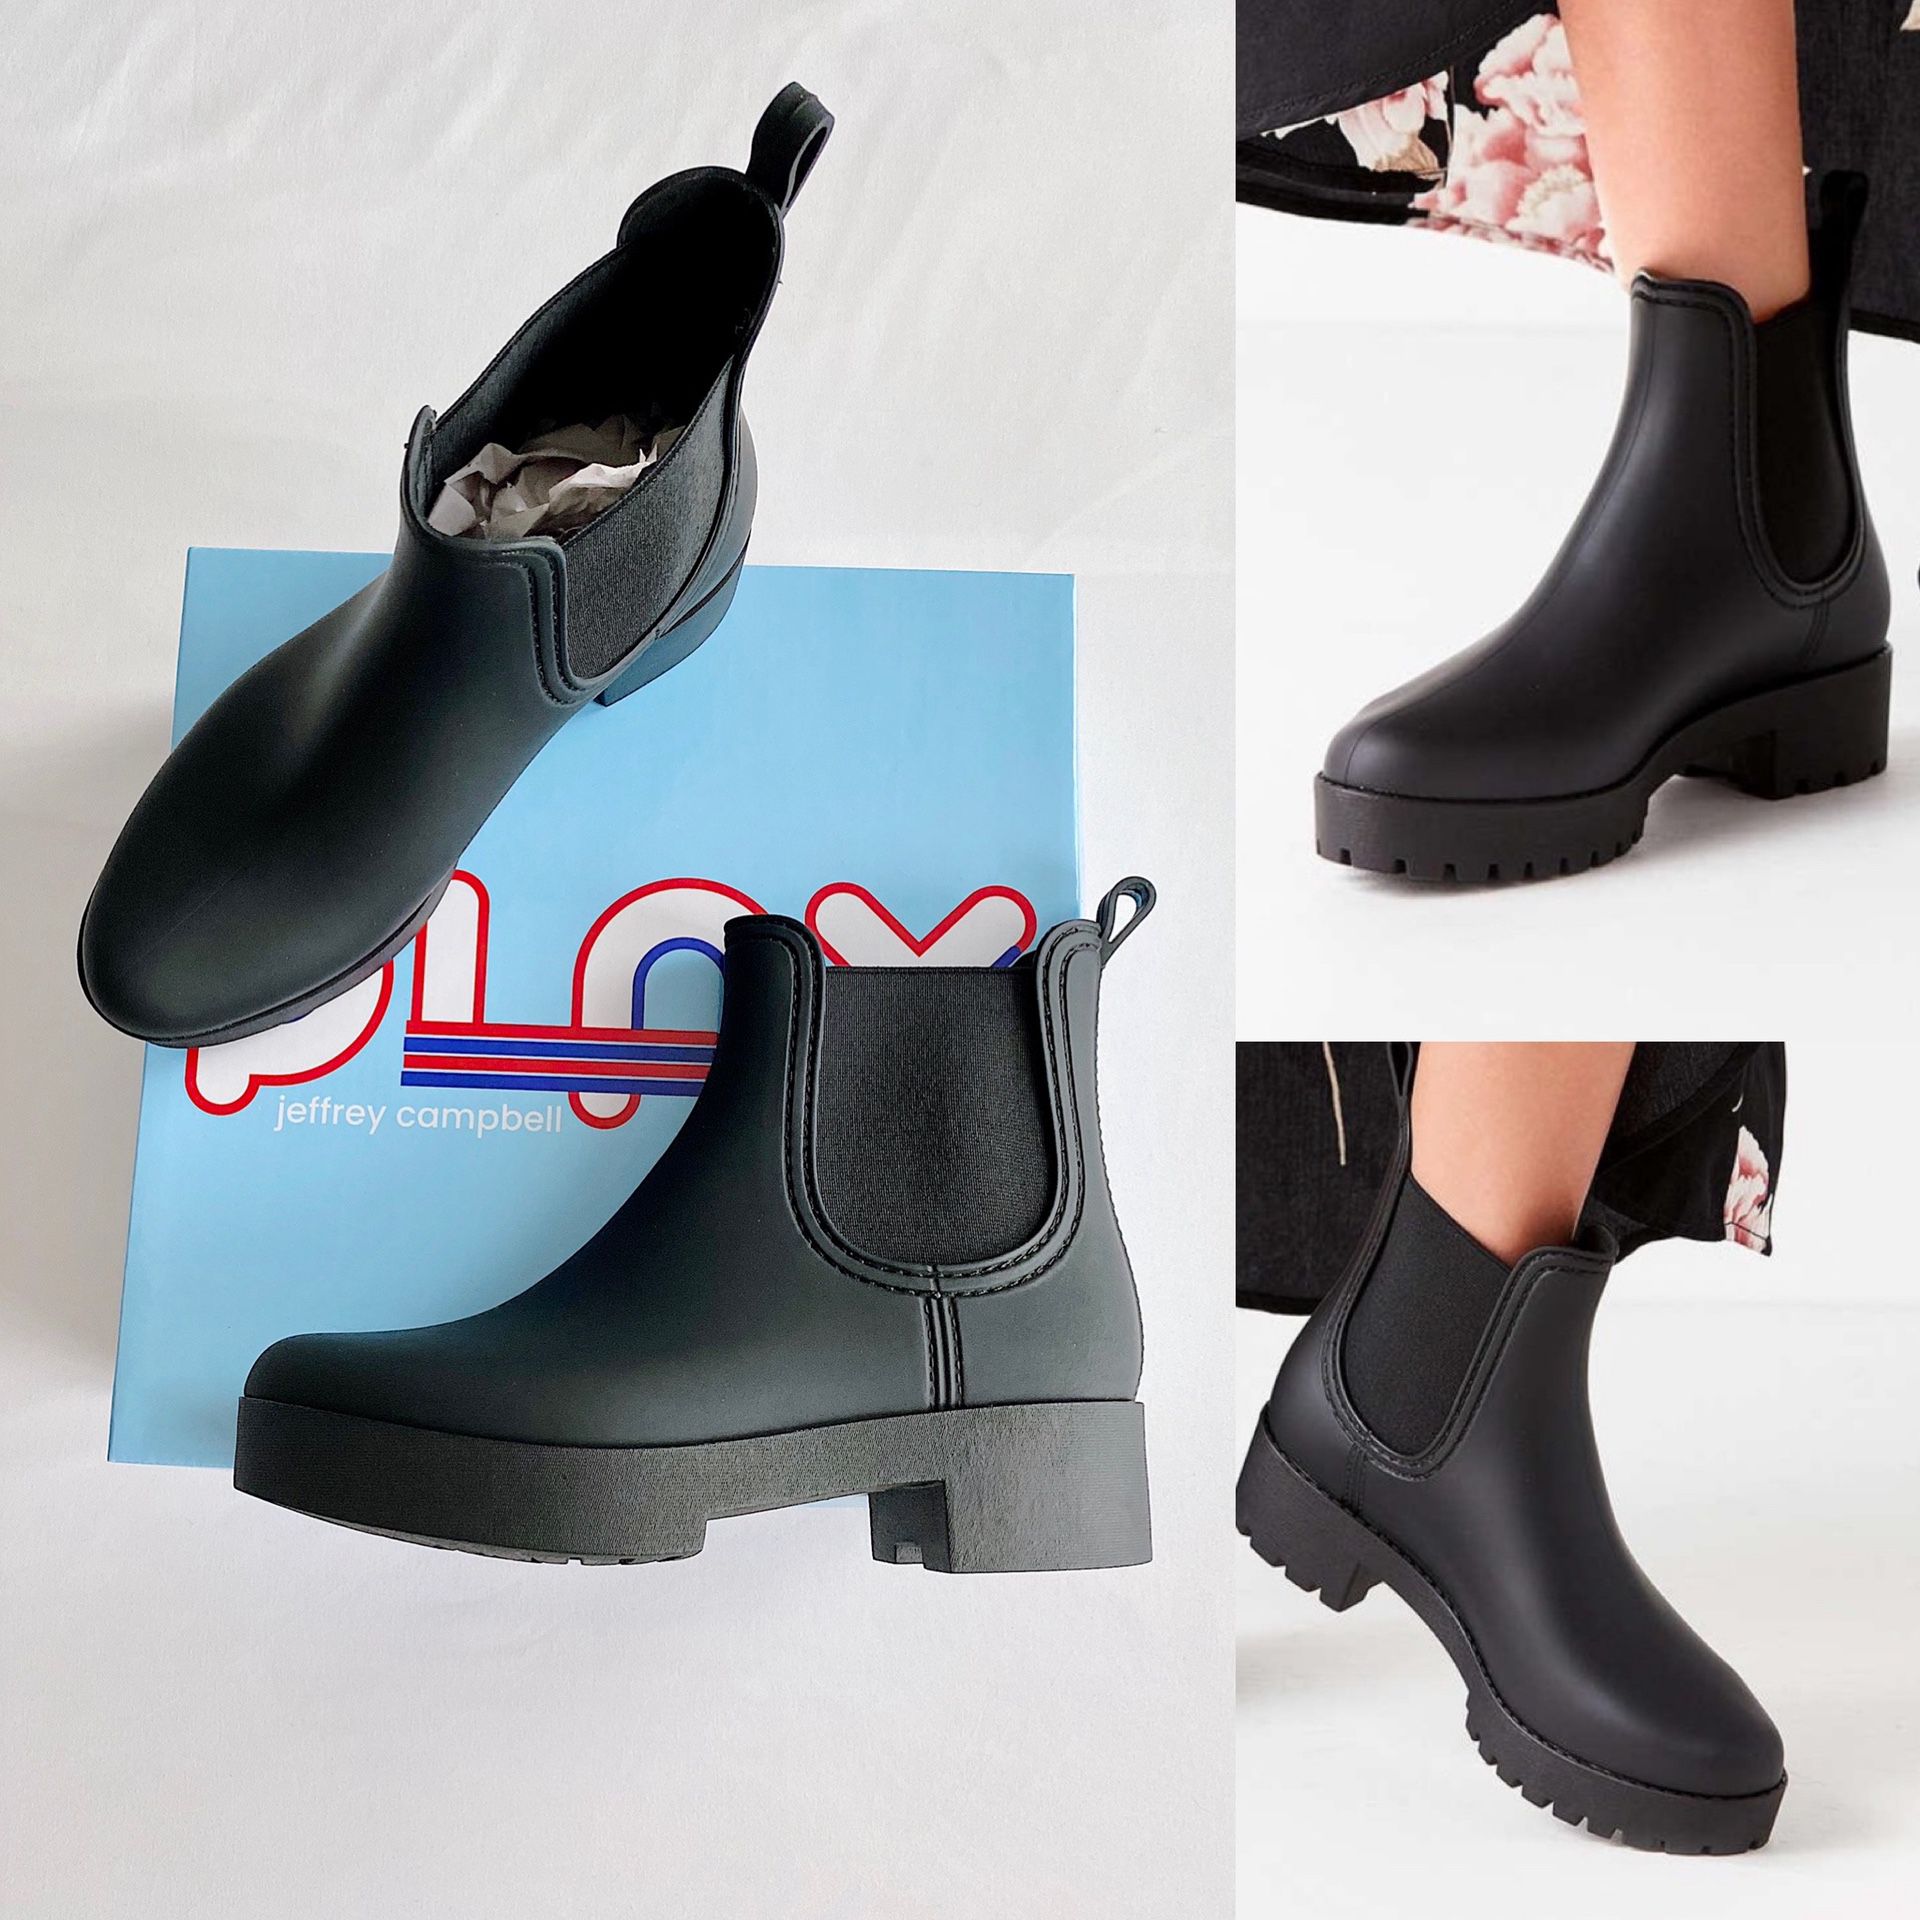 ✨New JEFFREY CAMPBELL Hydra Platform Waterproof Chelsea Rain Boots Women Shoes Size 8M